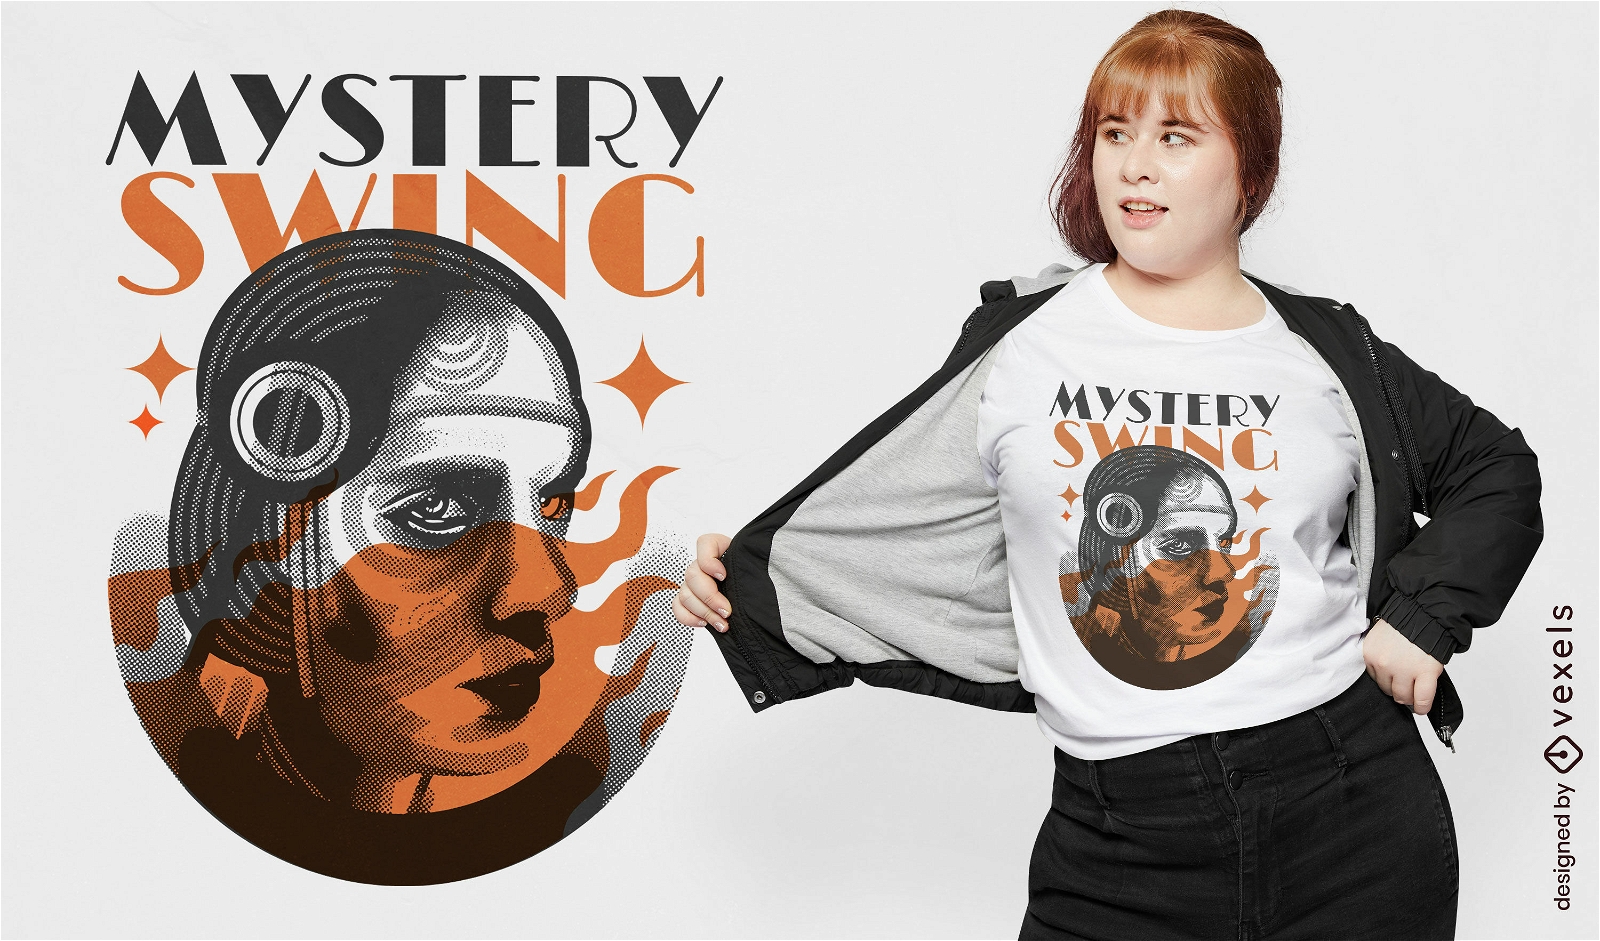 Art deco mystery woman t-shirt design